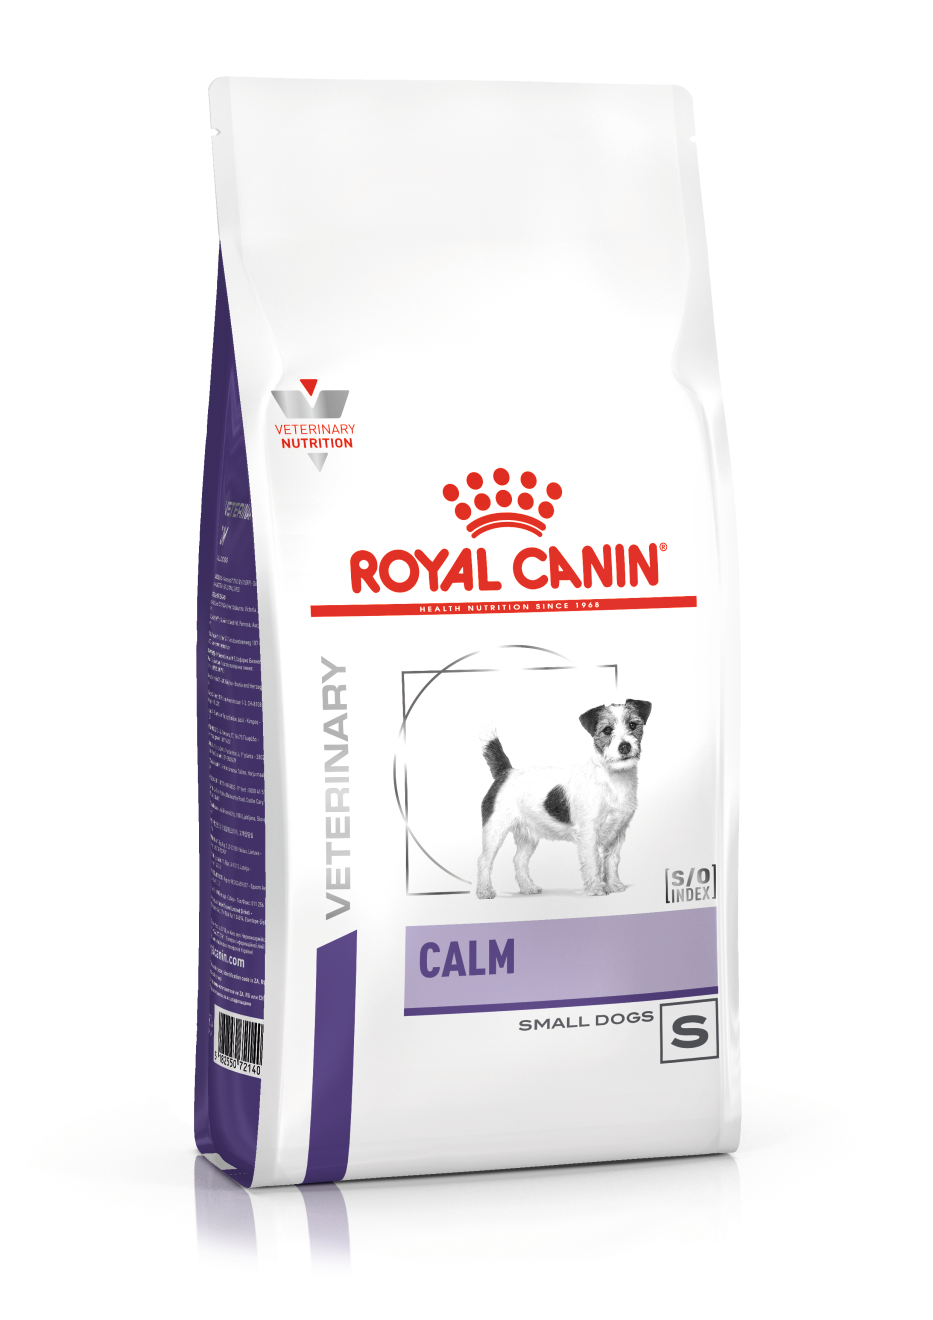 Royal Canin Calm hond 3x 4 kg